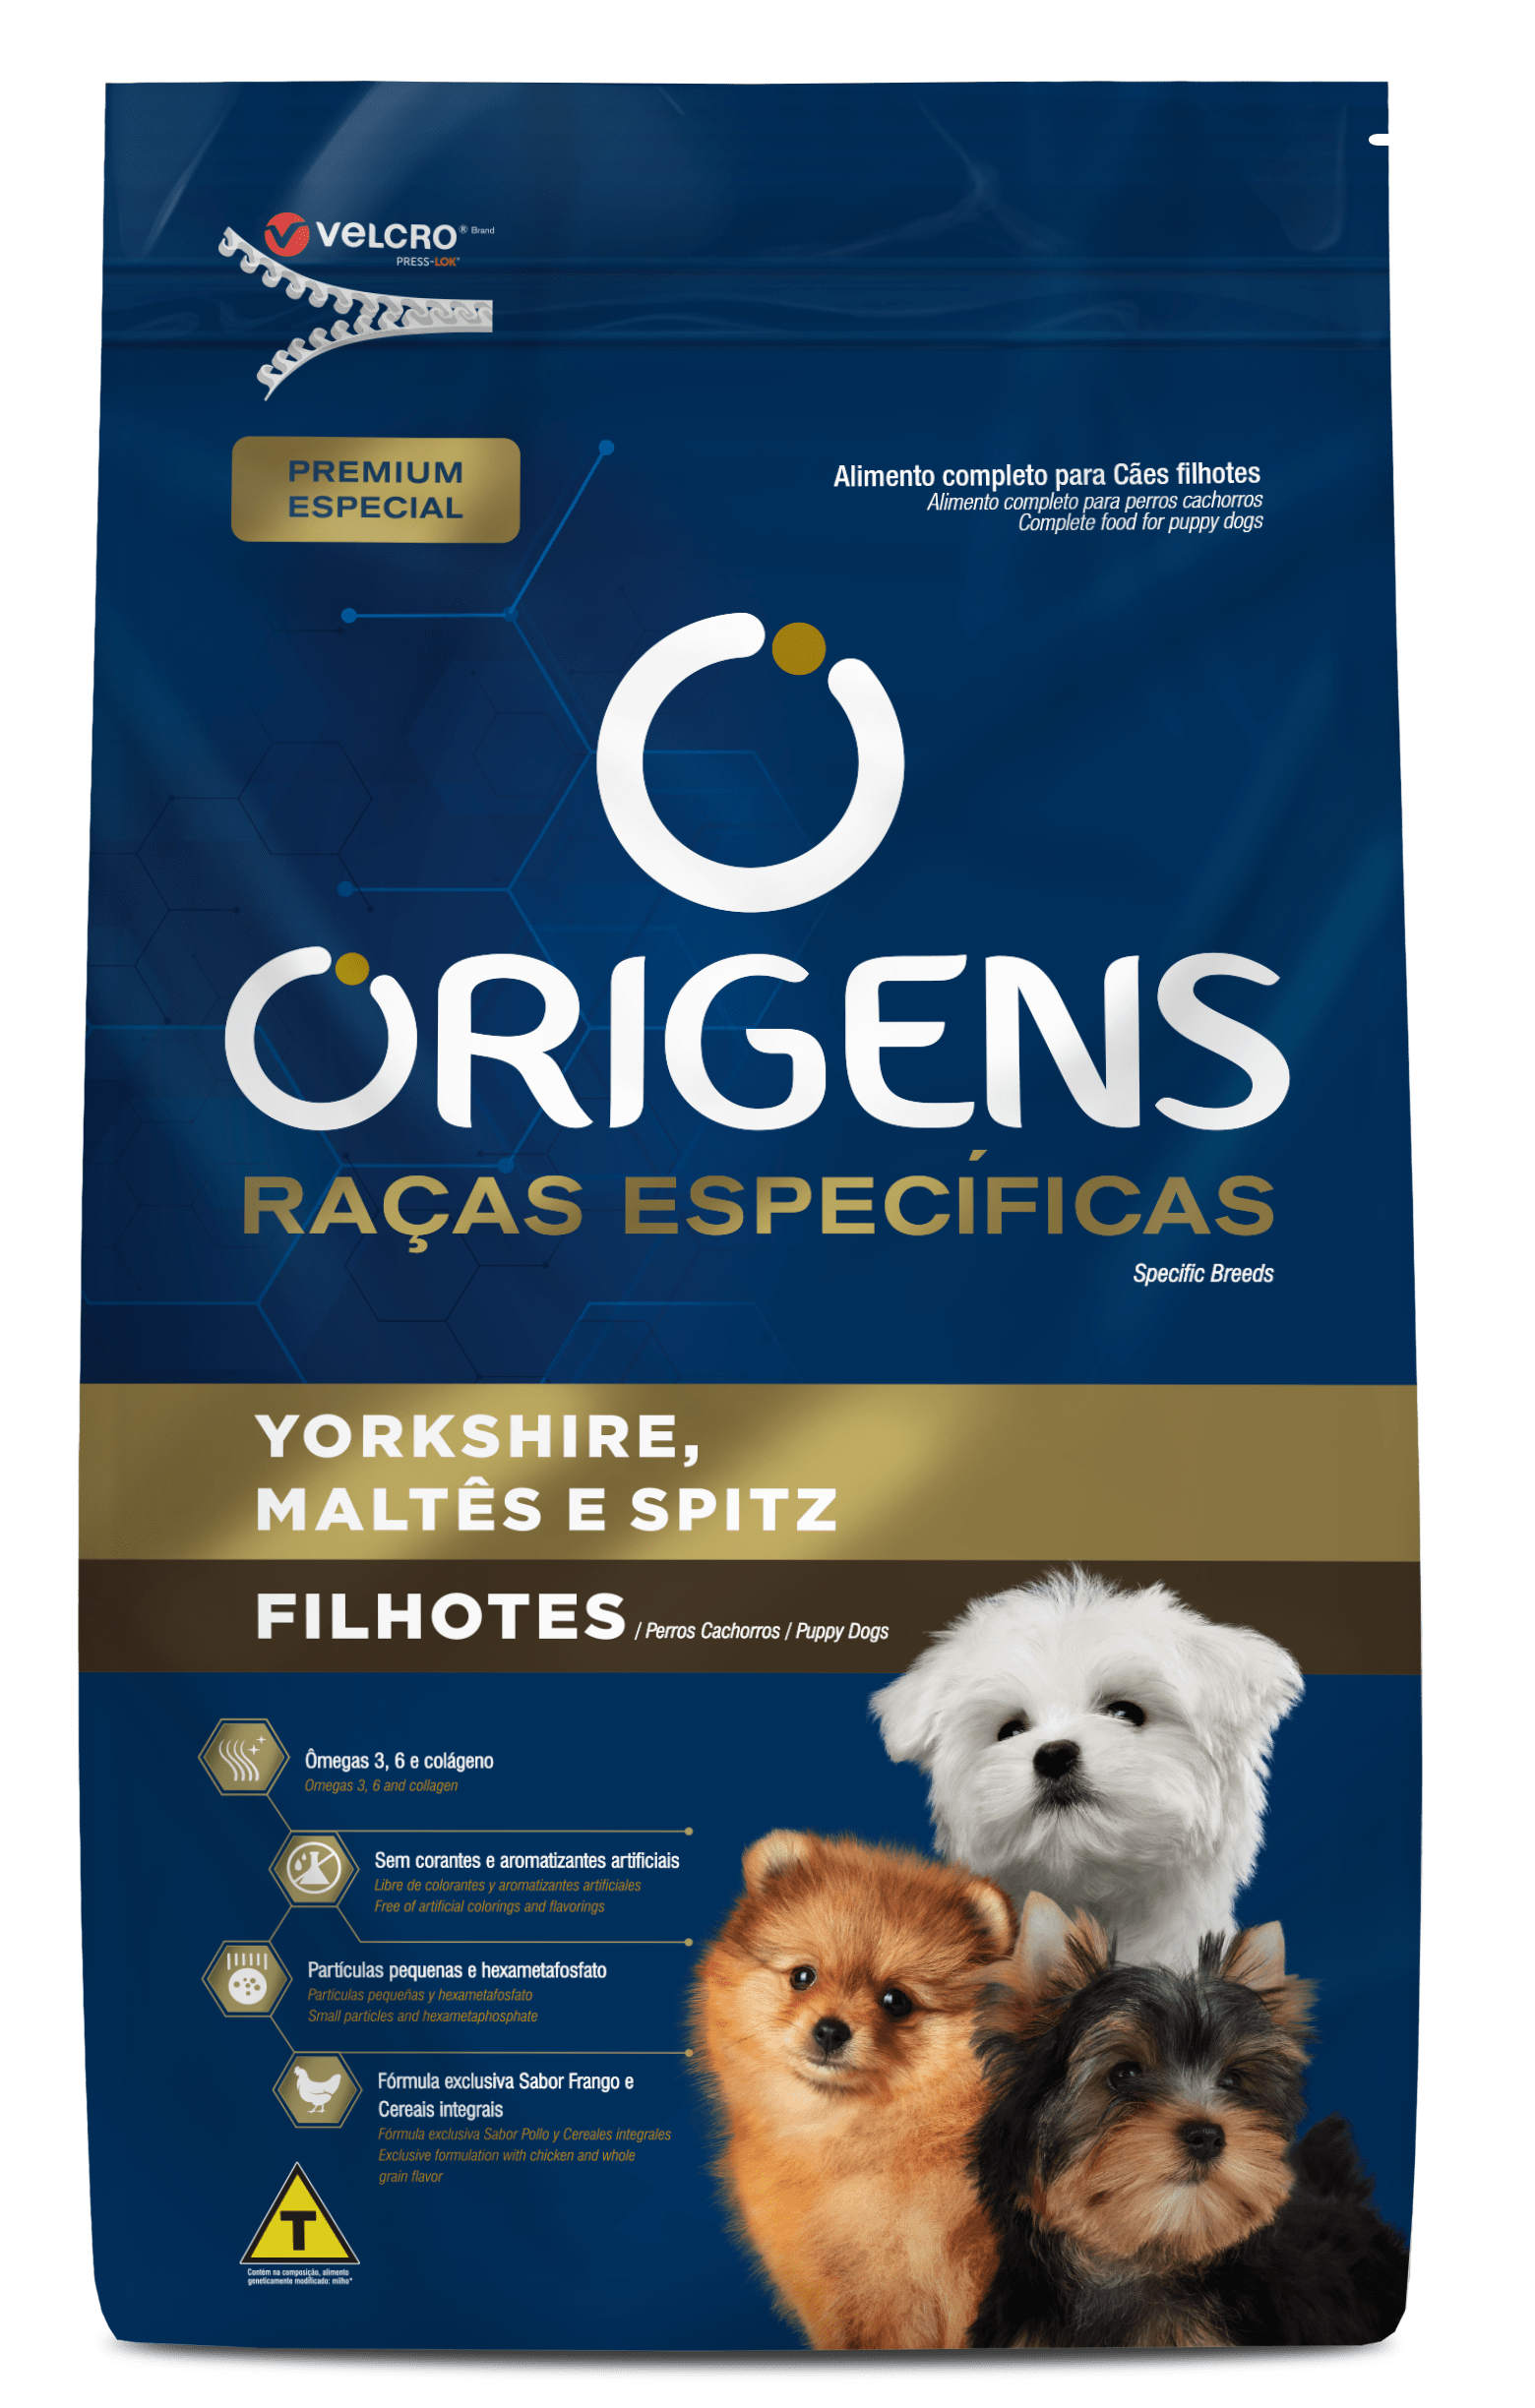 Origens Premium Especial Specific Breeds Puppies Yorkshire, Maltese and Spitz